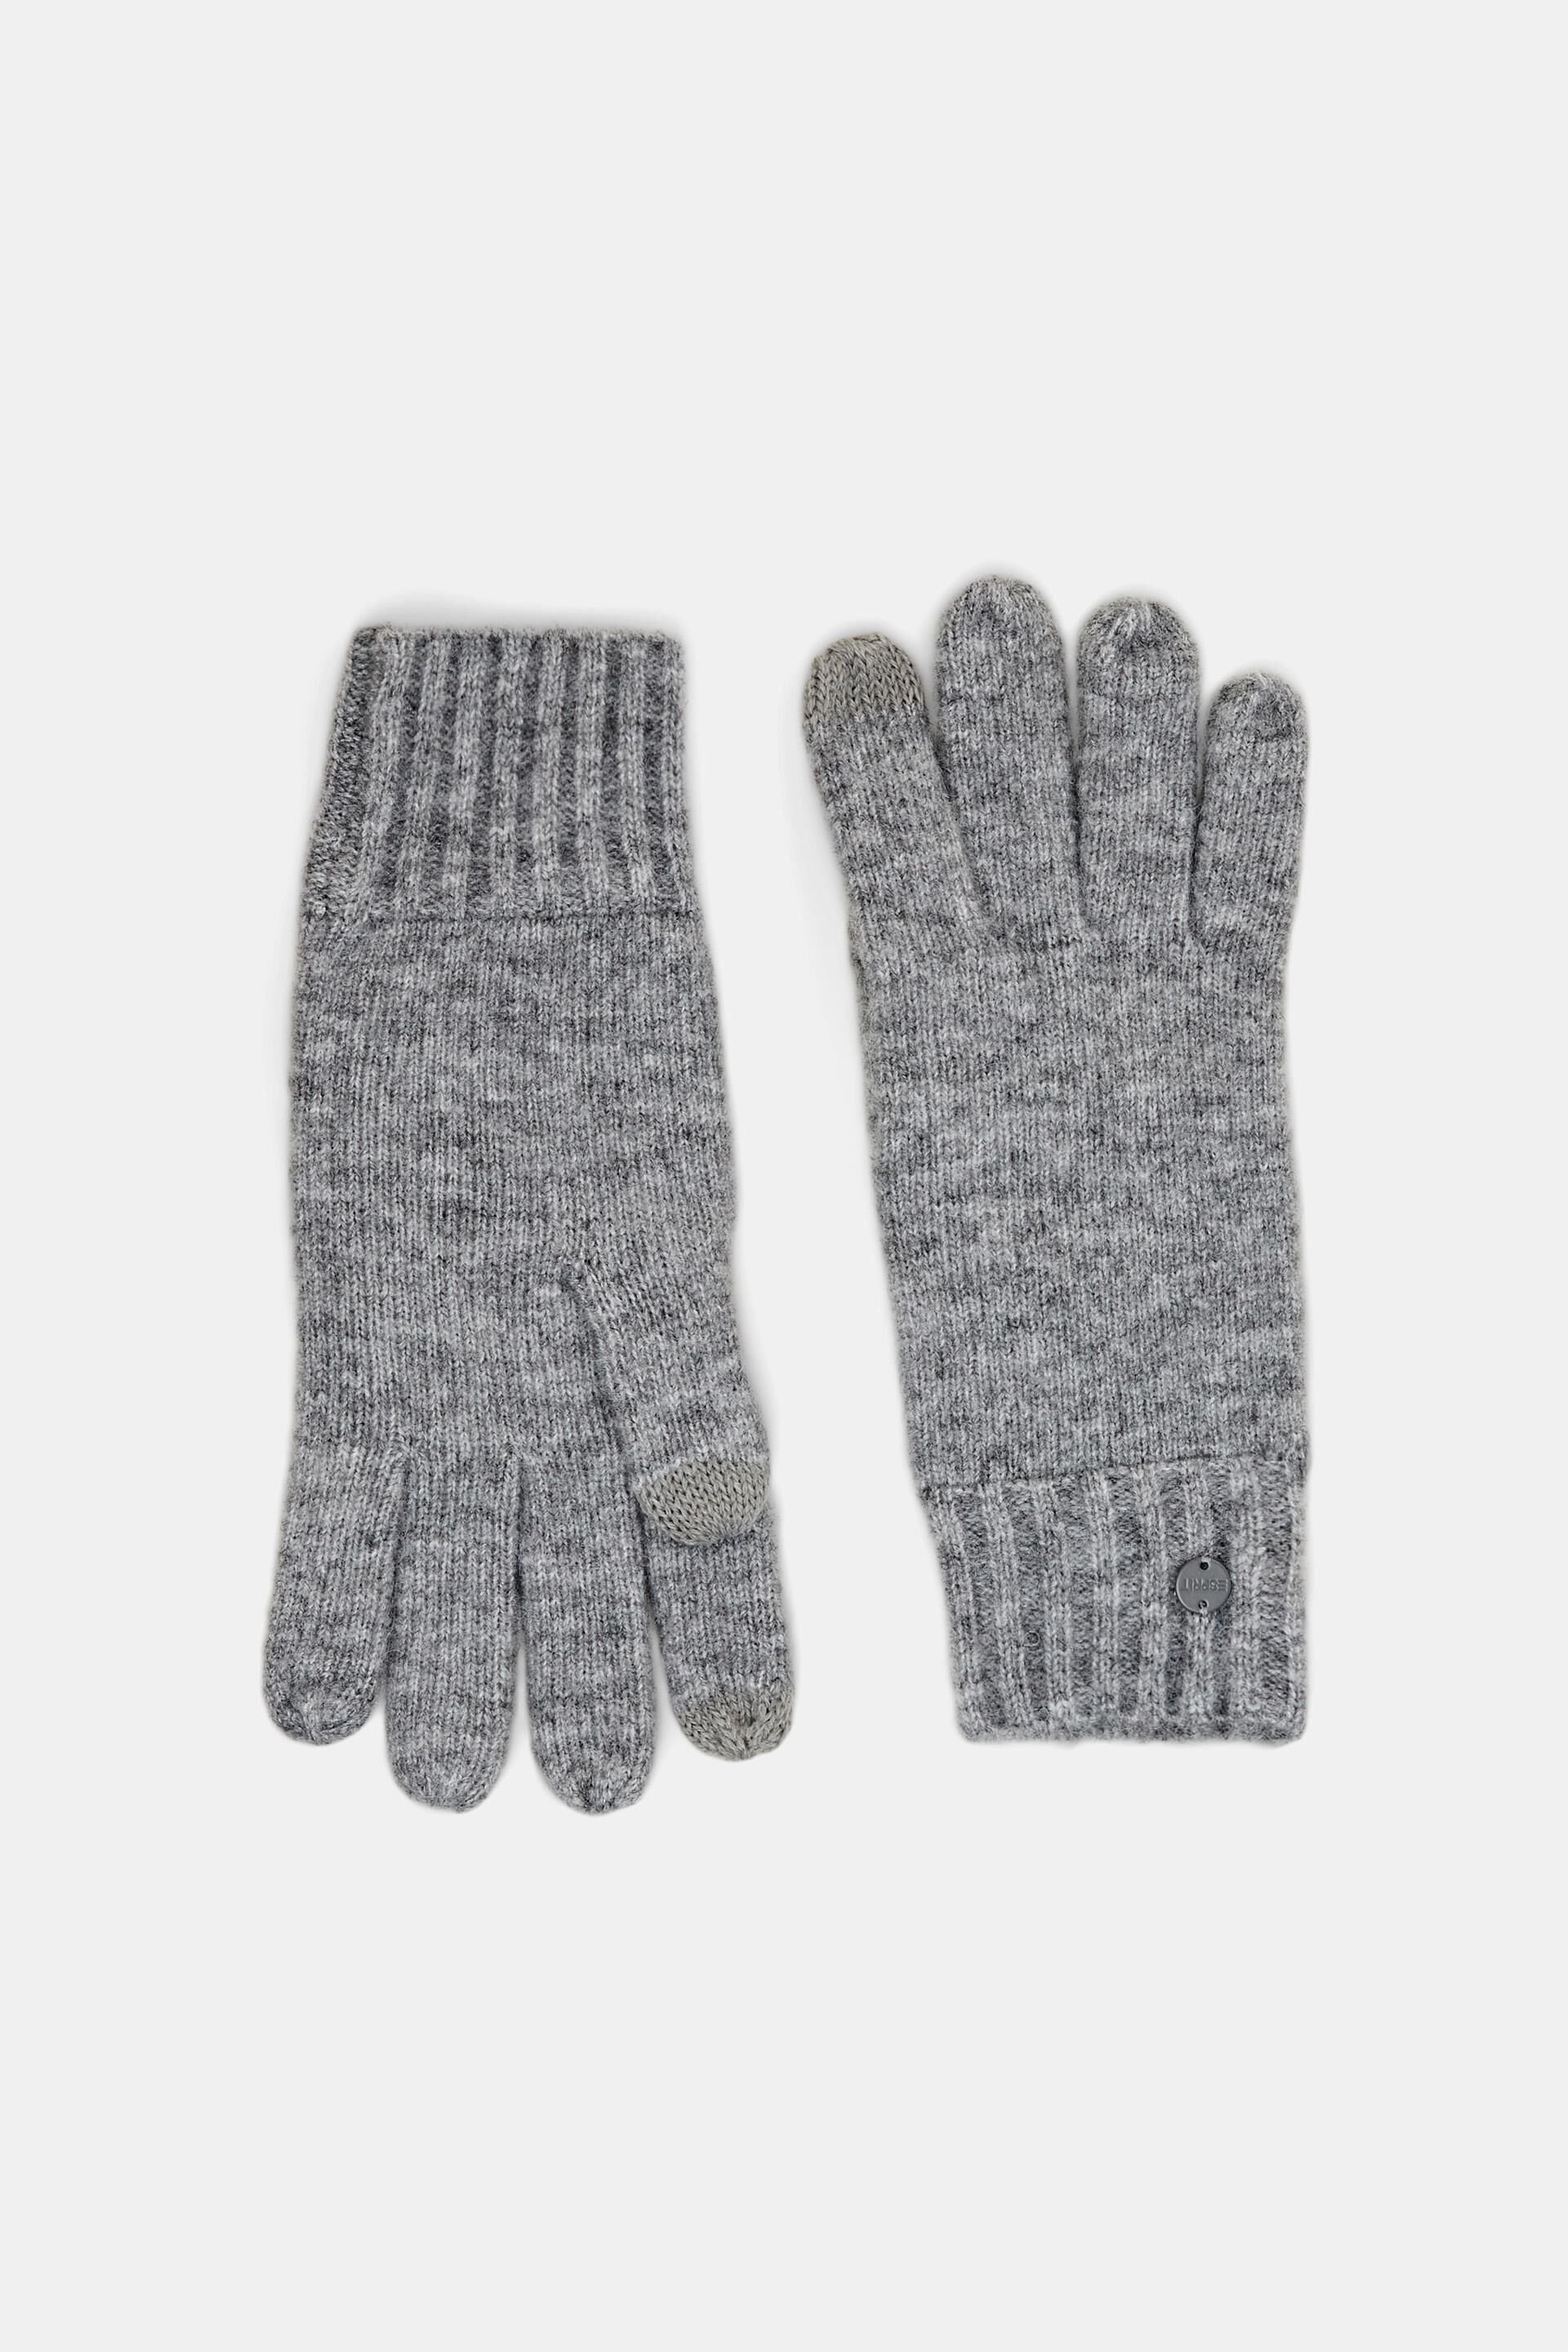 Esprit Gloves non-leather